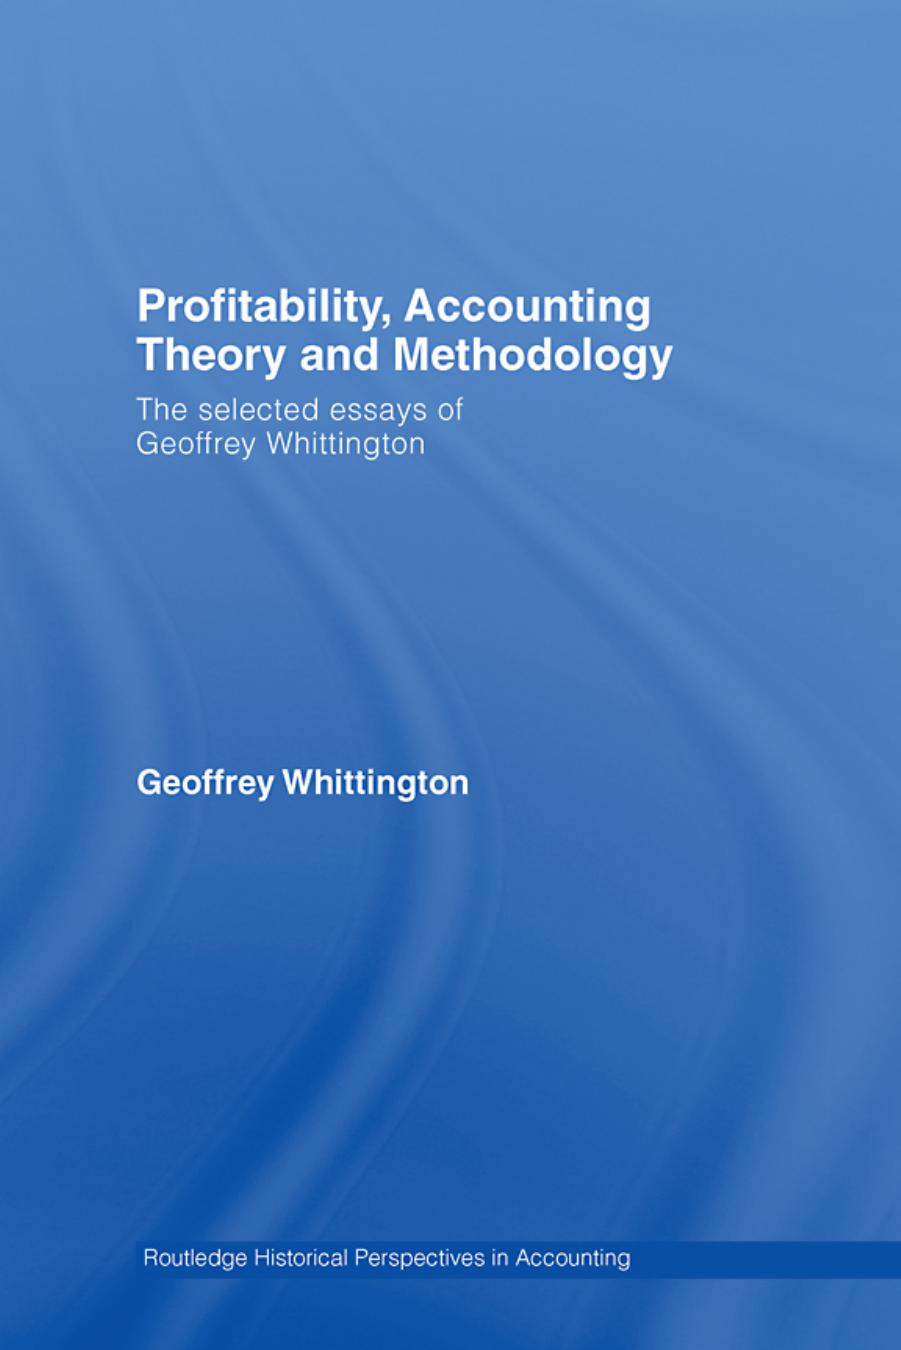 Profitability, Accounting and Methodology: The Selected Essays of Geoffrey Whittington